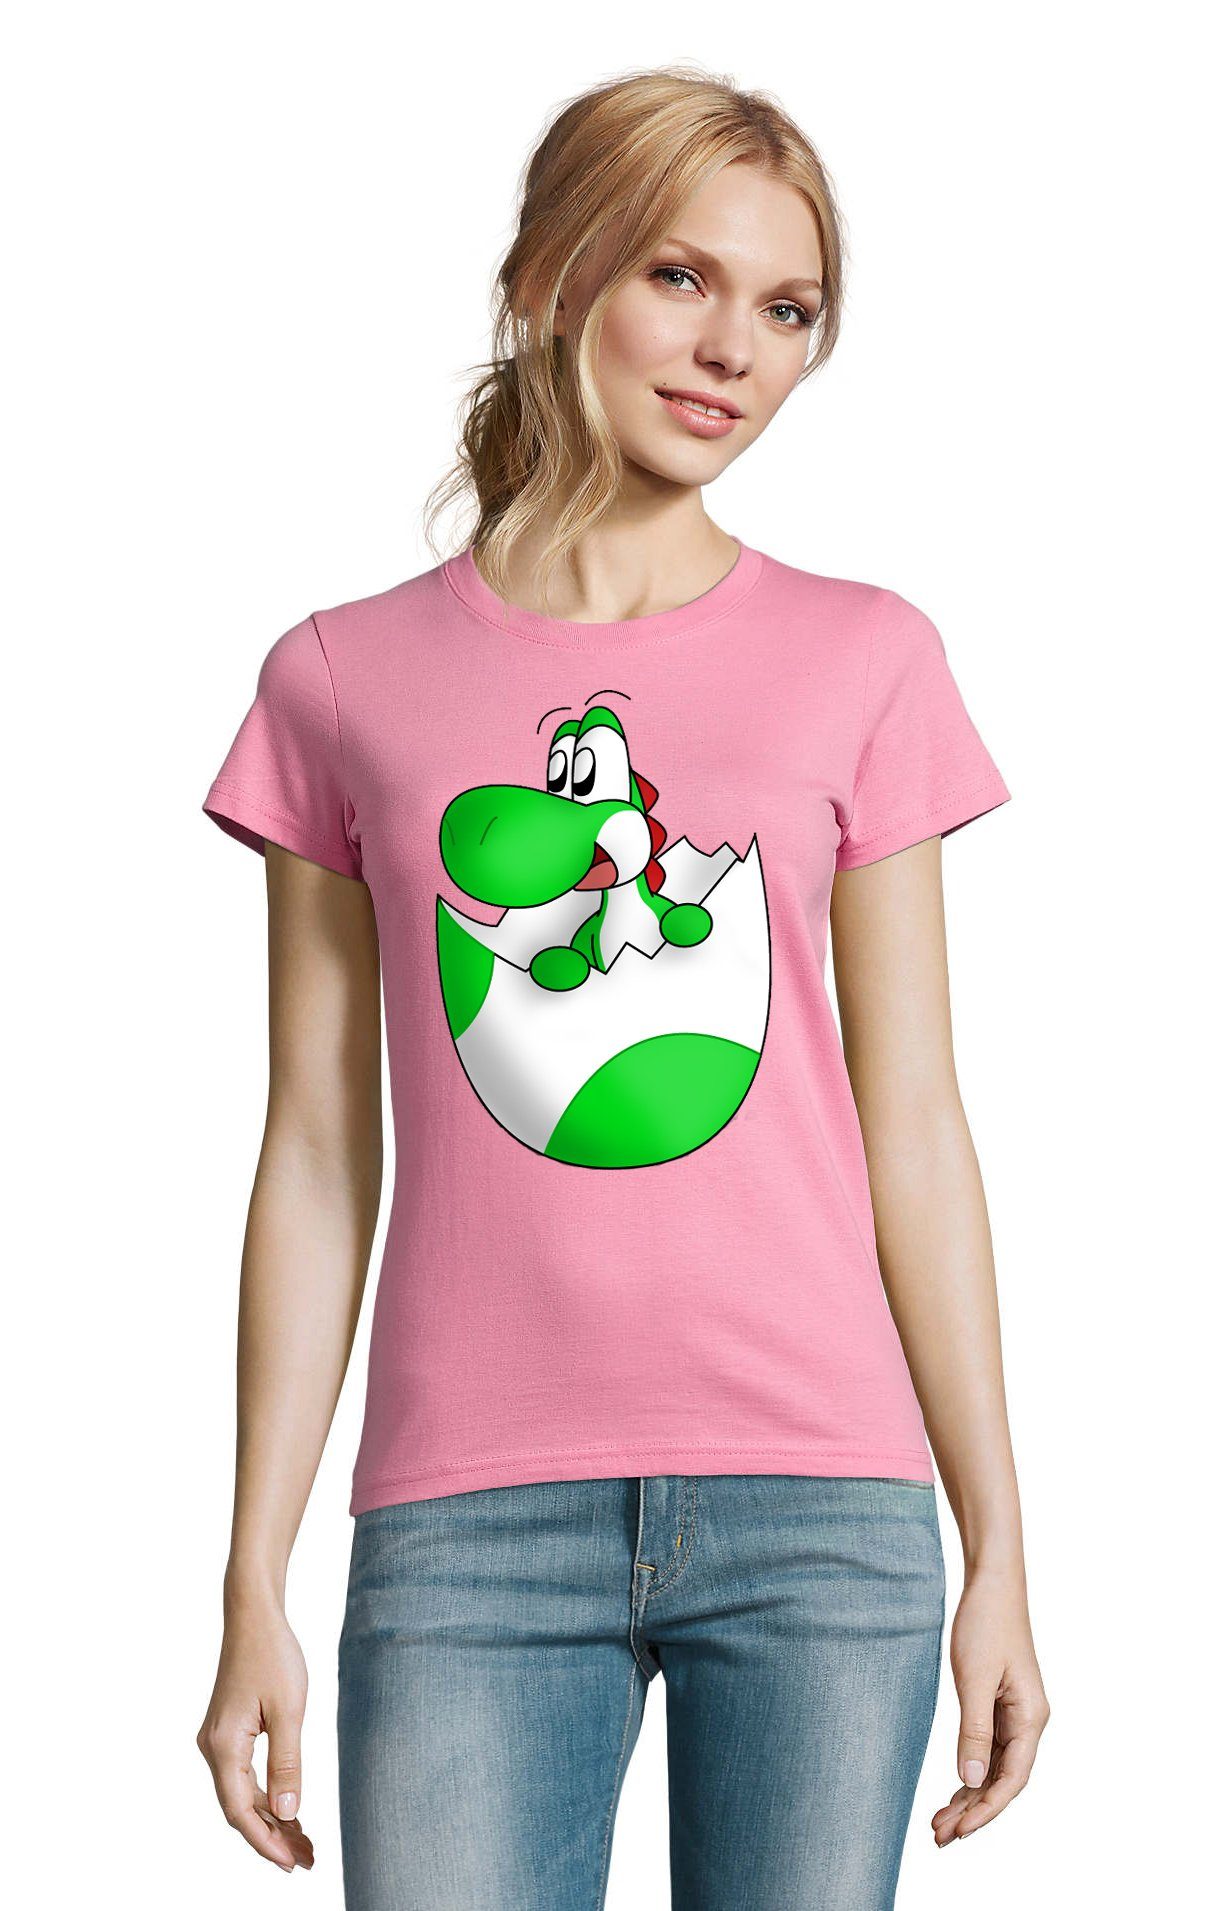 Blondie & Brownie T-Shirt Damen Baby Yoshi Ei Mario Konsole Gaming Spiel Nintendo Rosa